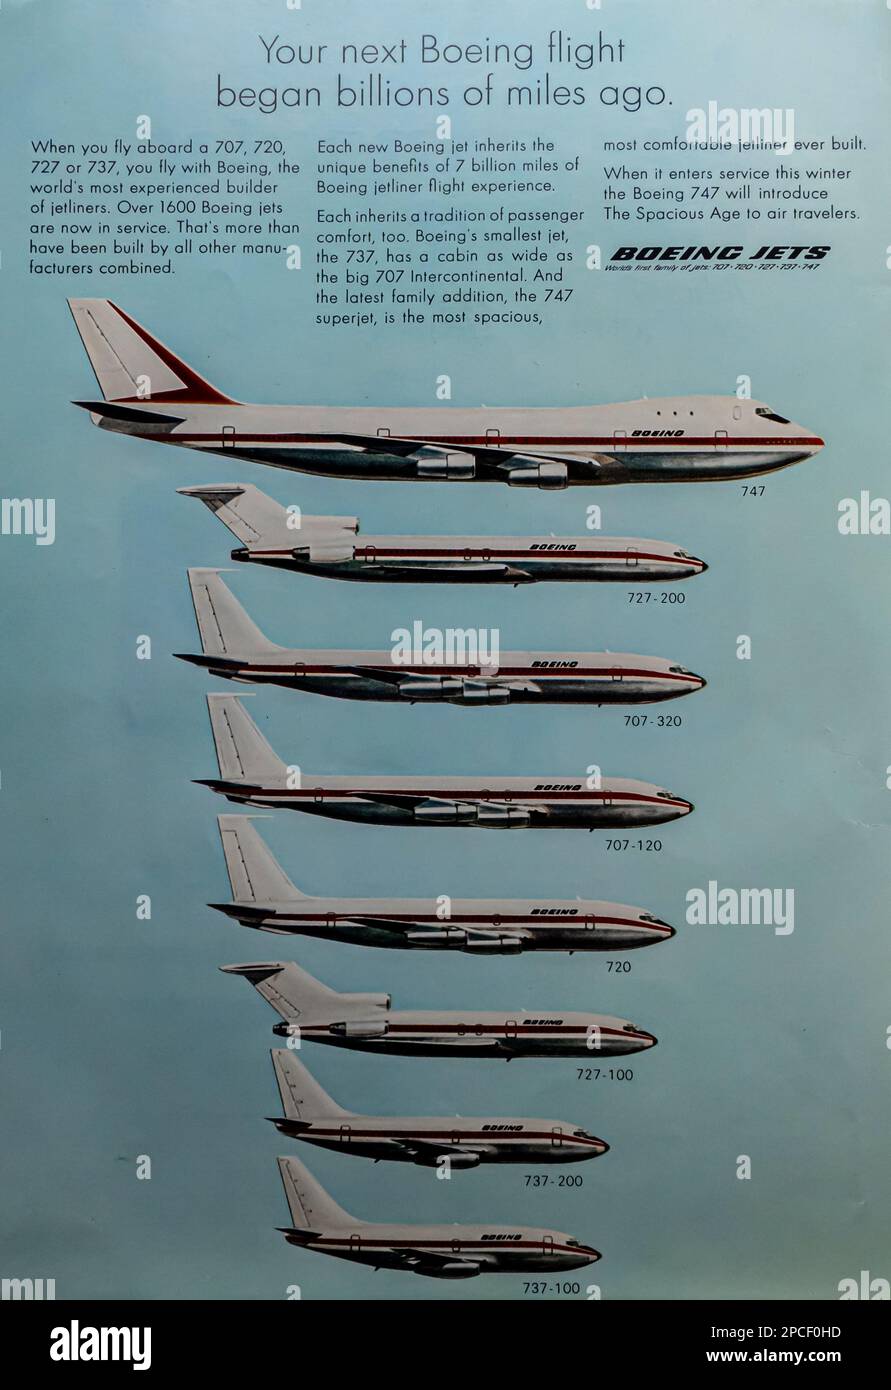 Boeing advert in a Natgeo magazine September 1969 Stock Photo